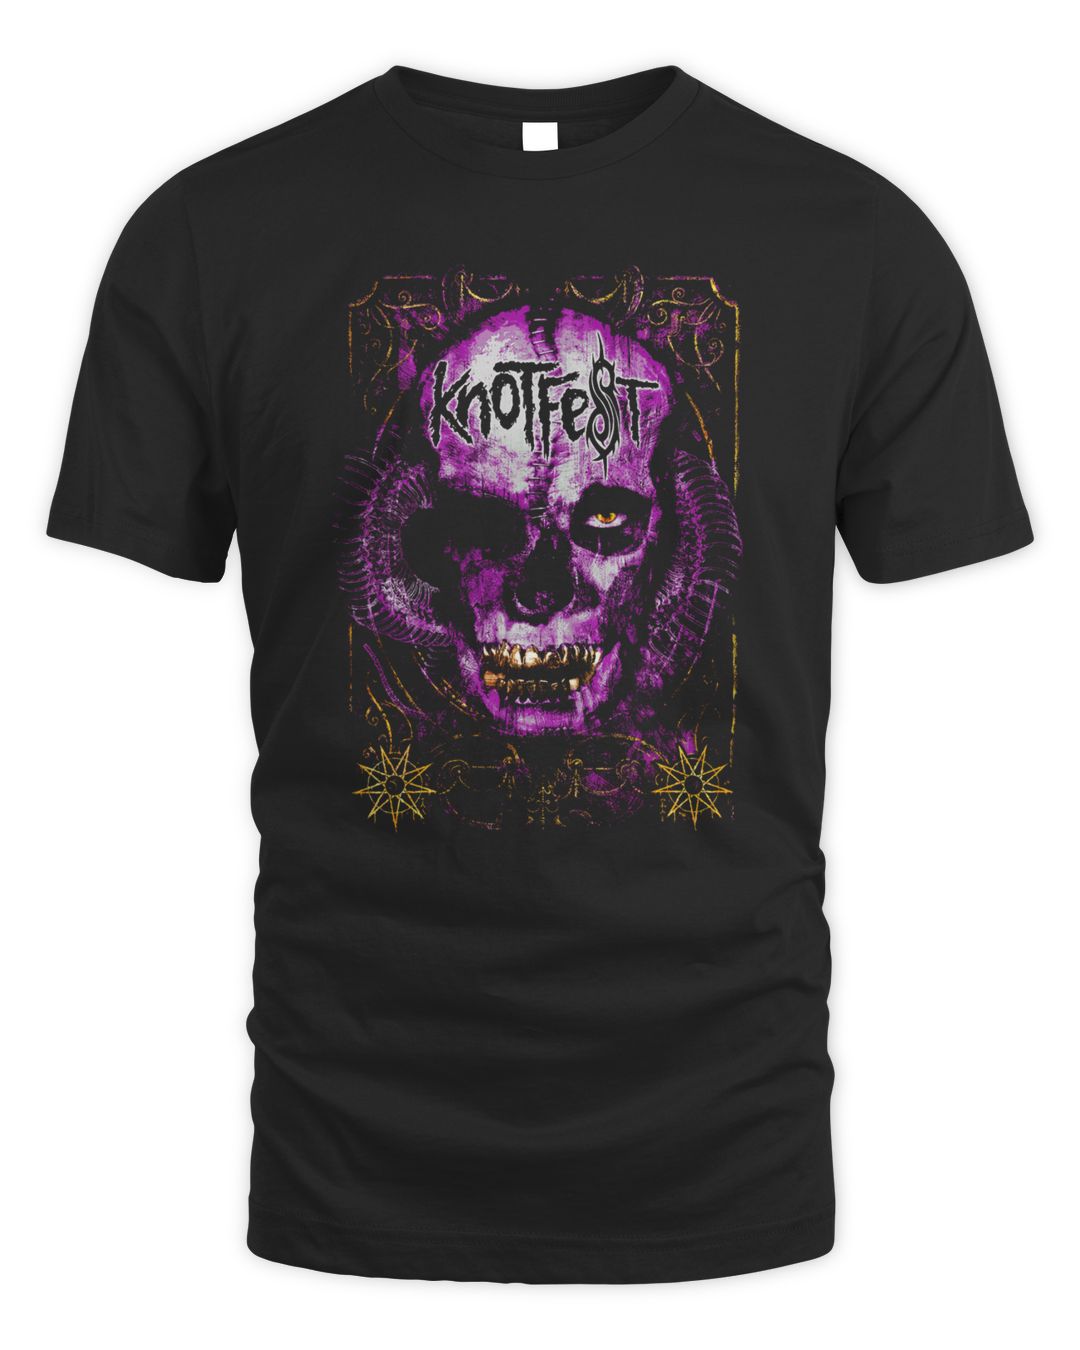 Slipknot Merch Composite Skull Roadshow Tour Shirt